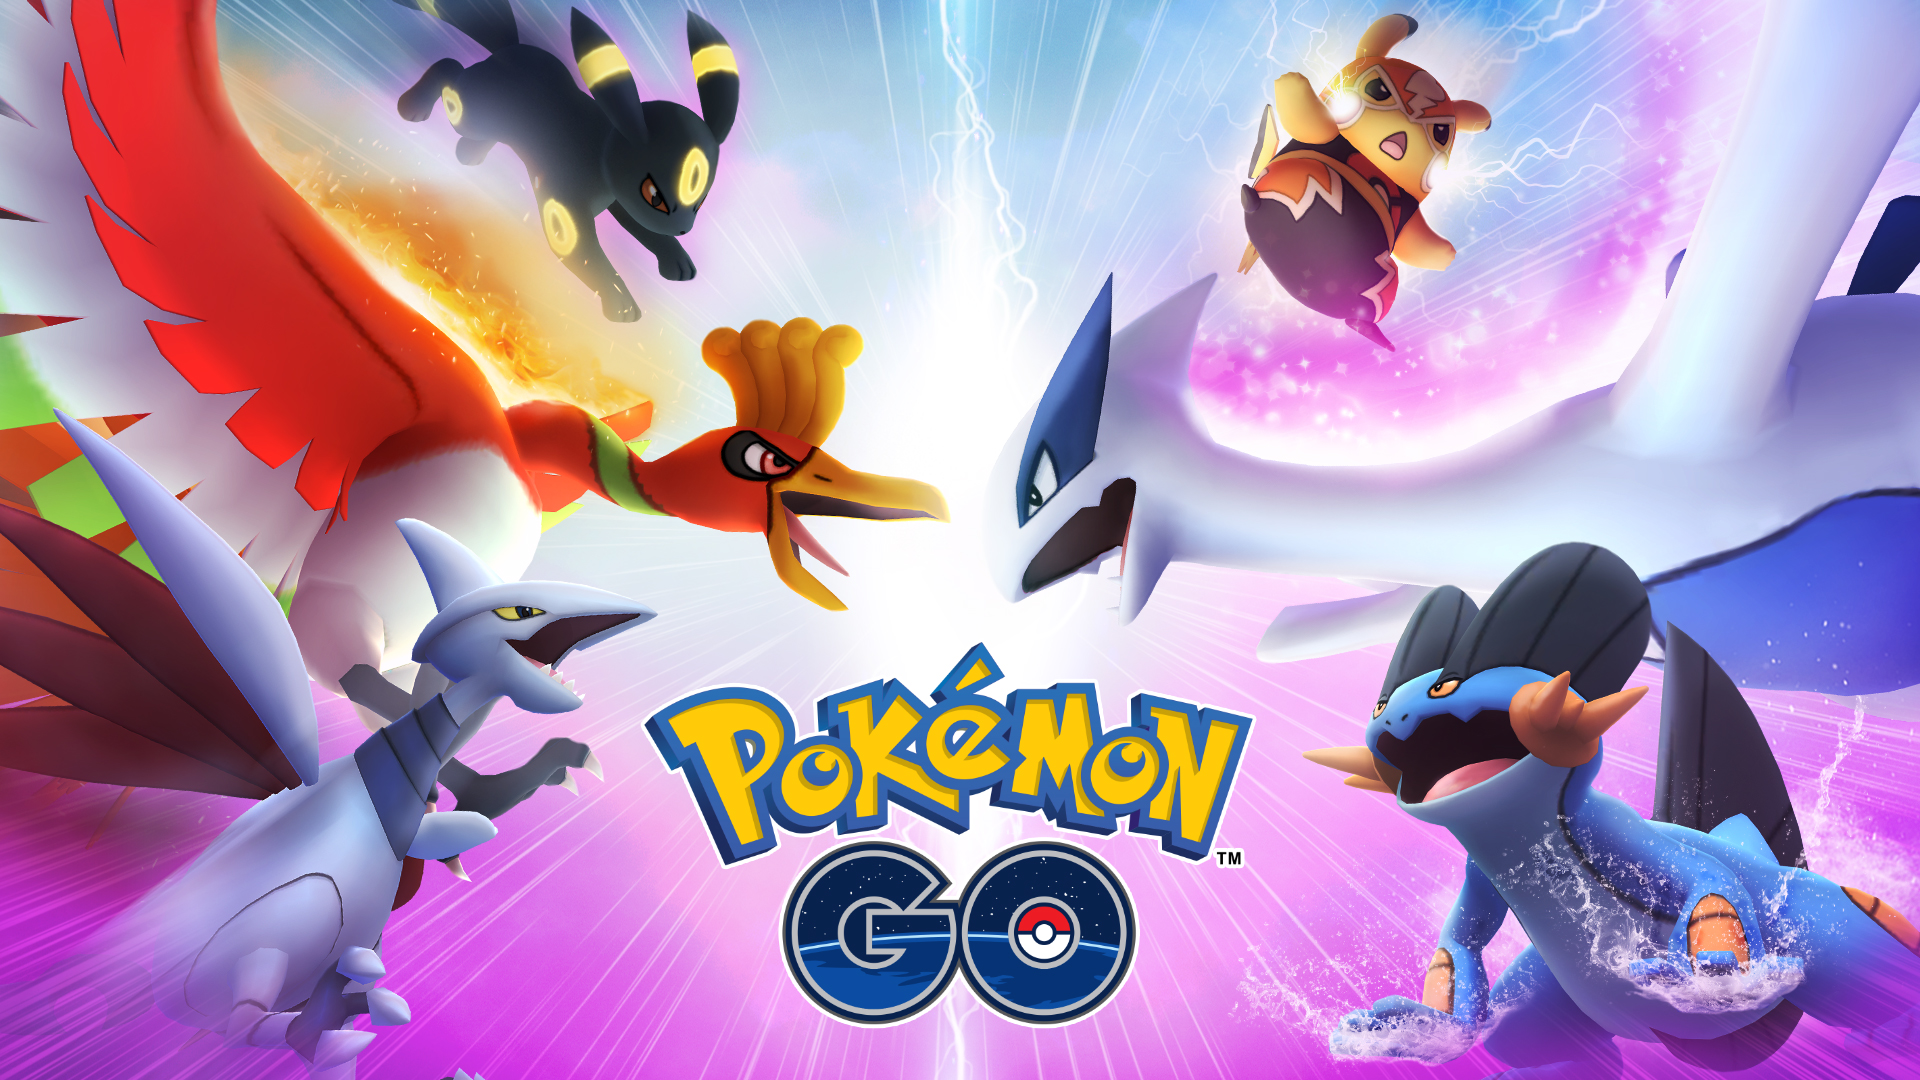 Pokémon Go updates: all the latest news and rumors | TechRadar